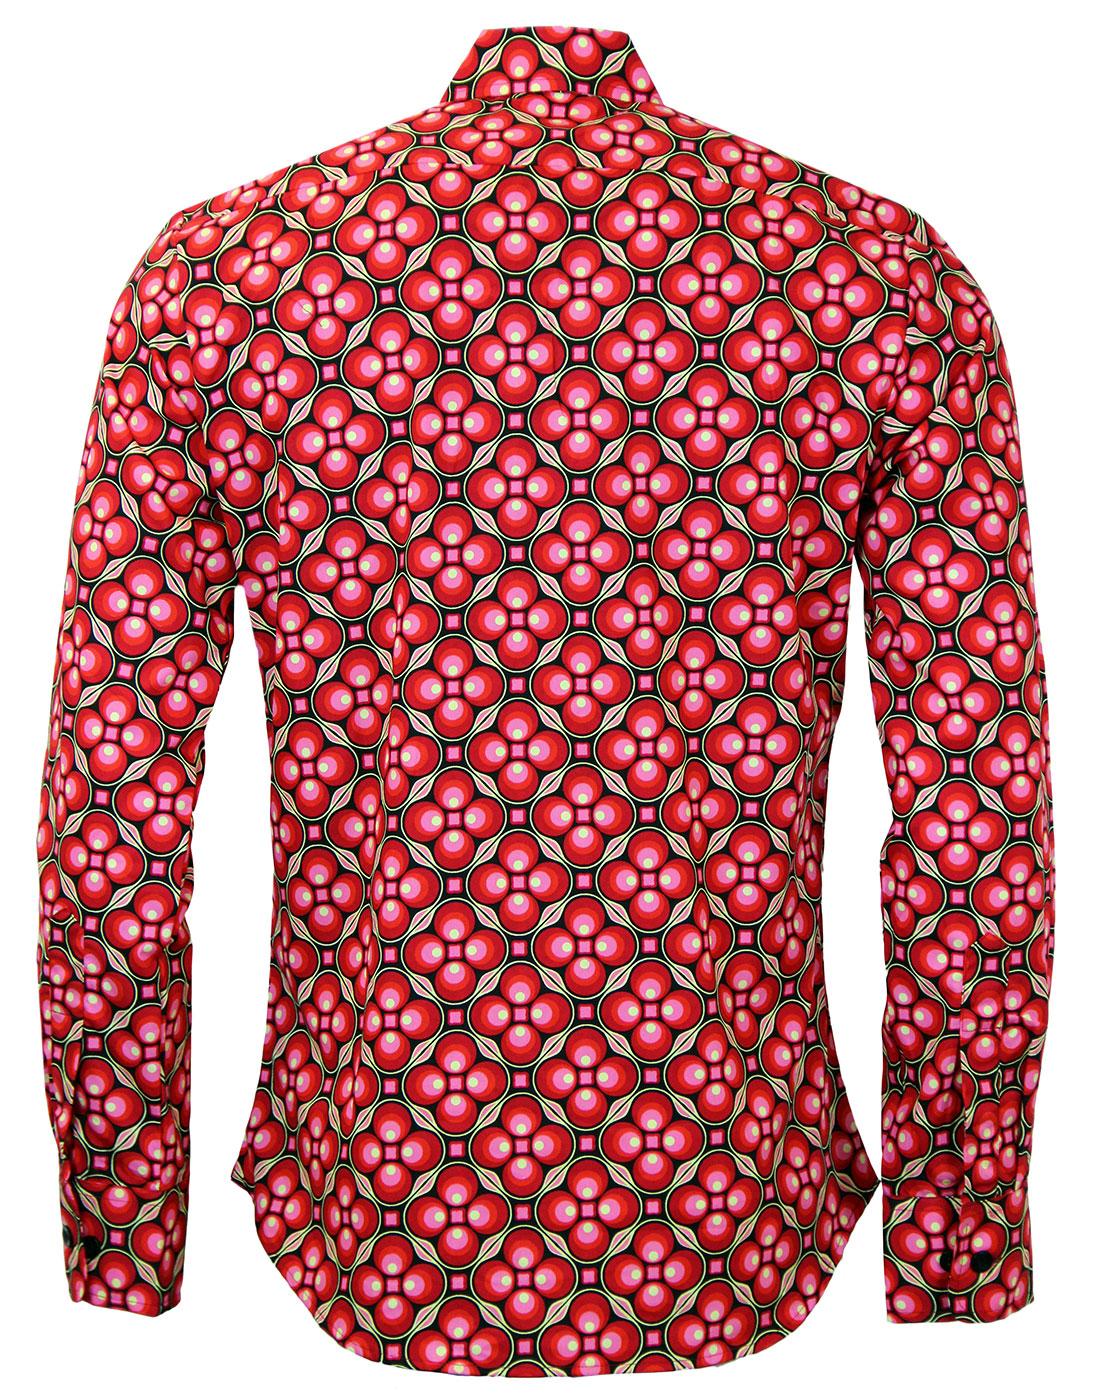 CHENASKI Dotsgrid Retro 1970s Mod Orb Print Shirt in Black/Red